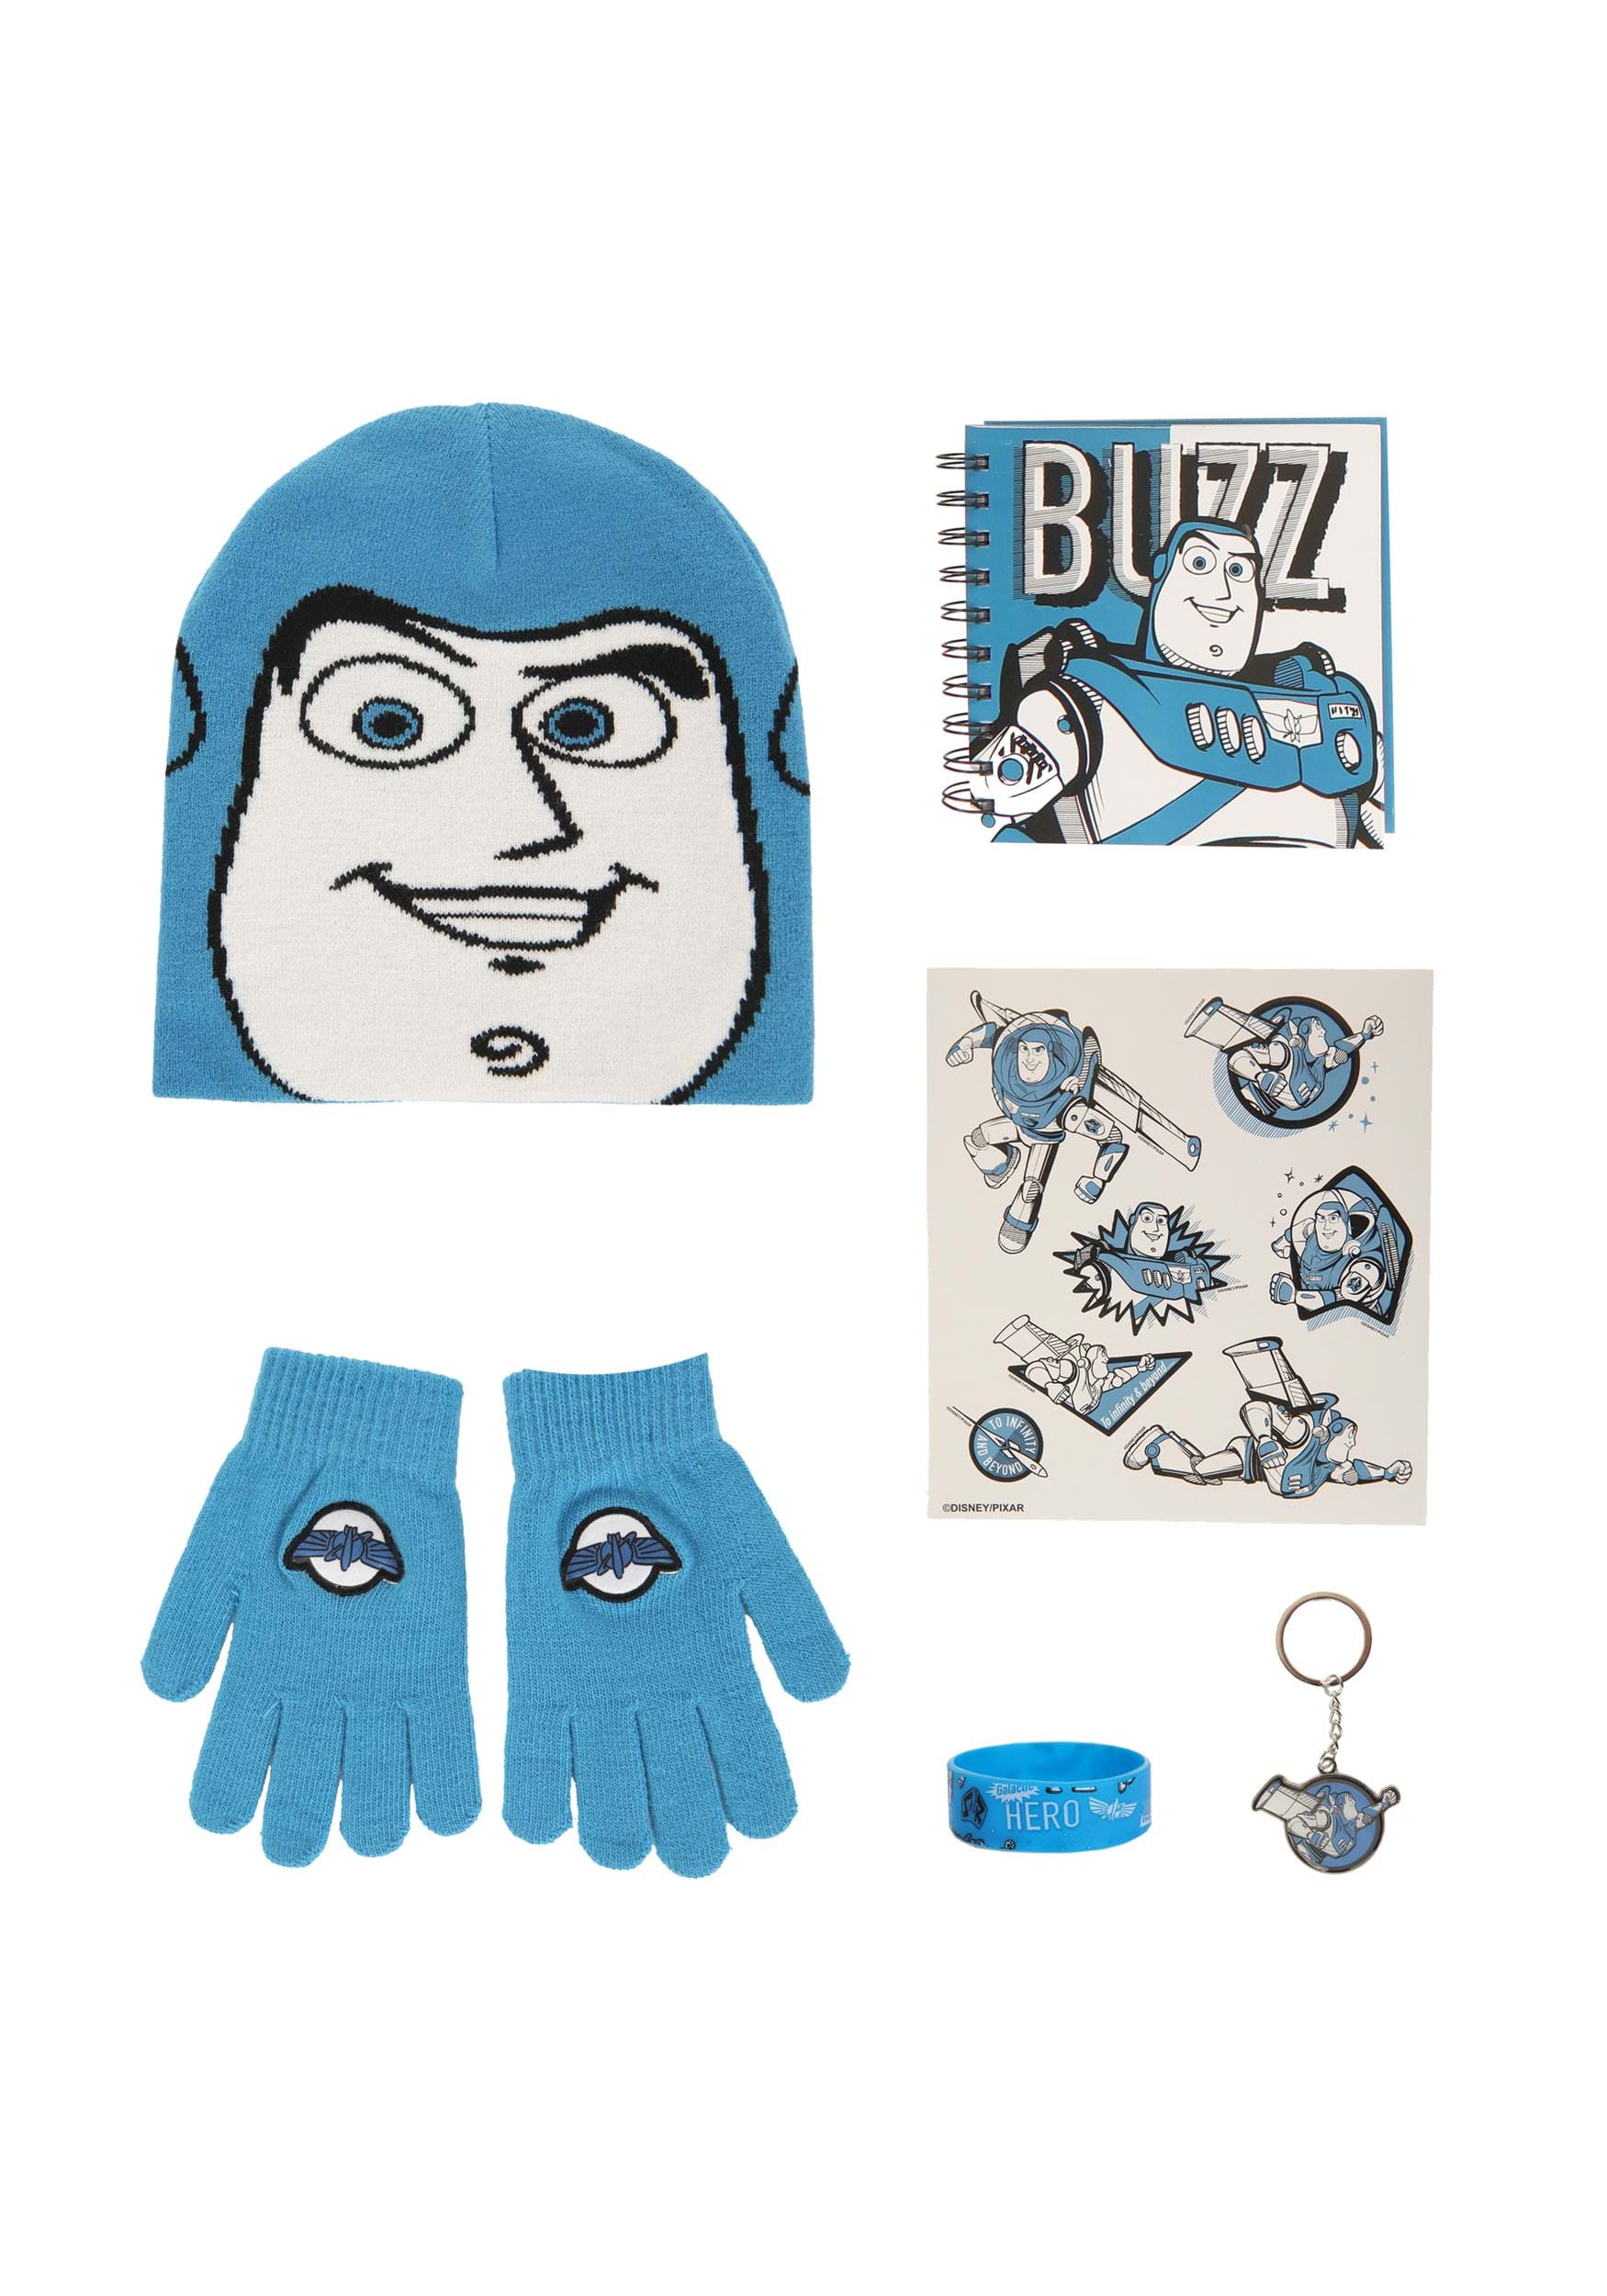 Toy Story Buzz Lightyear Gift Set